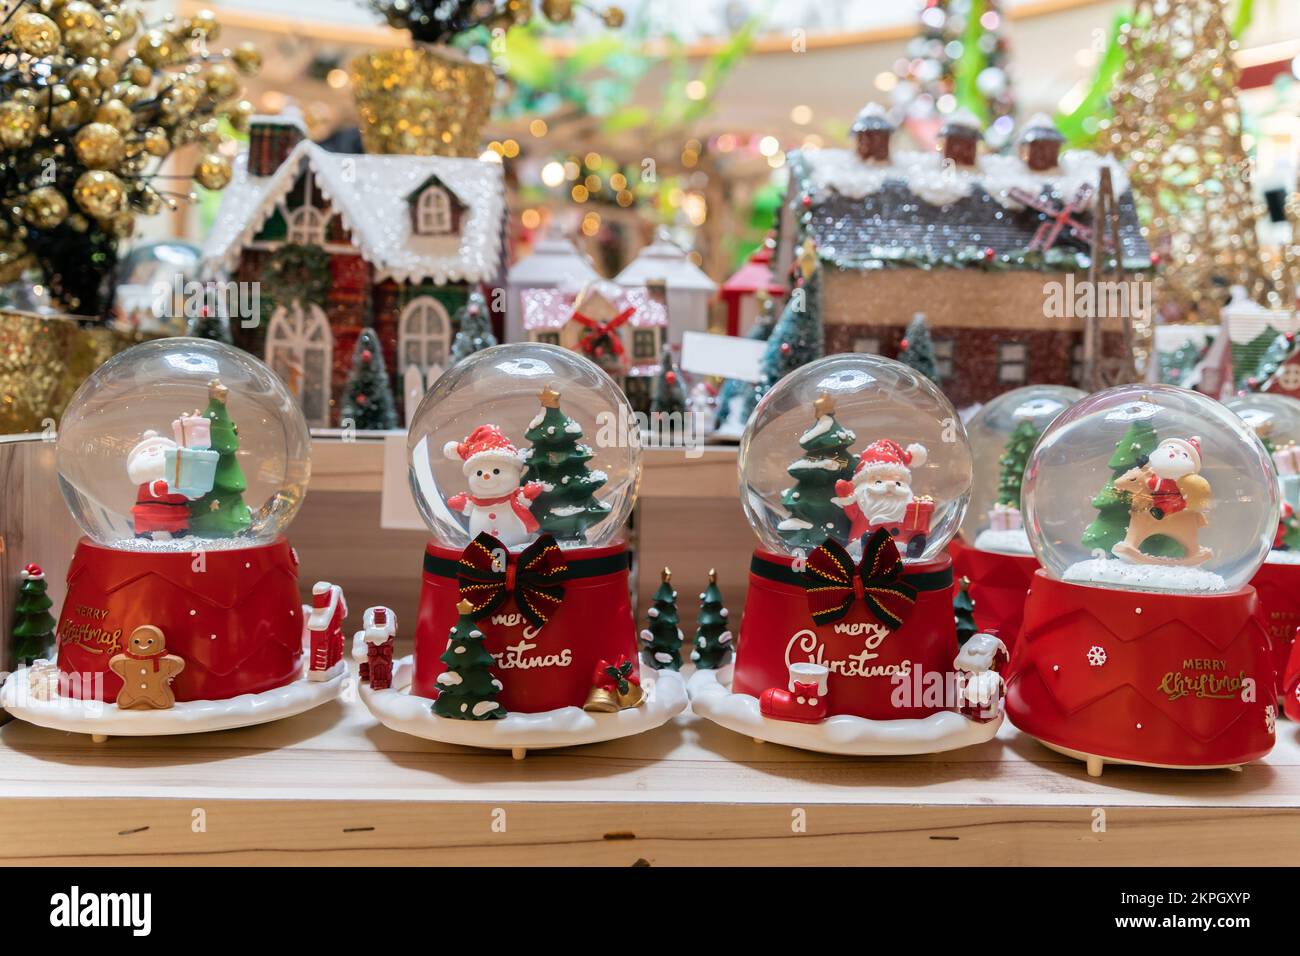 Christmas snow globe selling at the Christmas market. Stock Photo